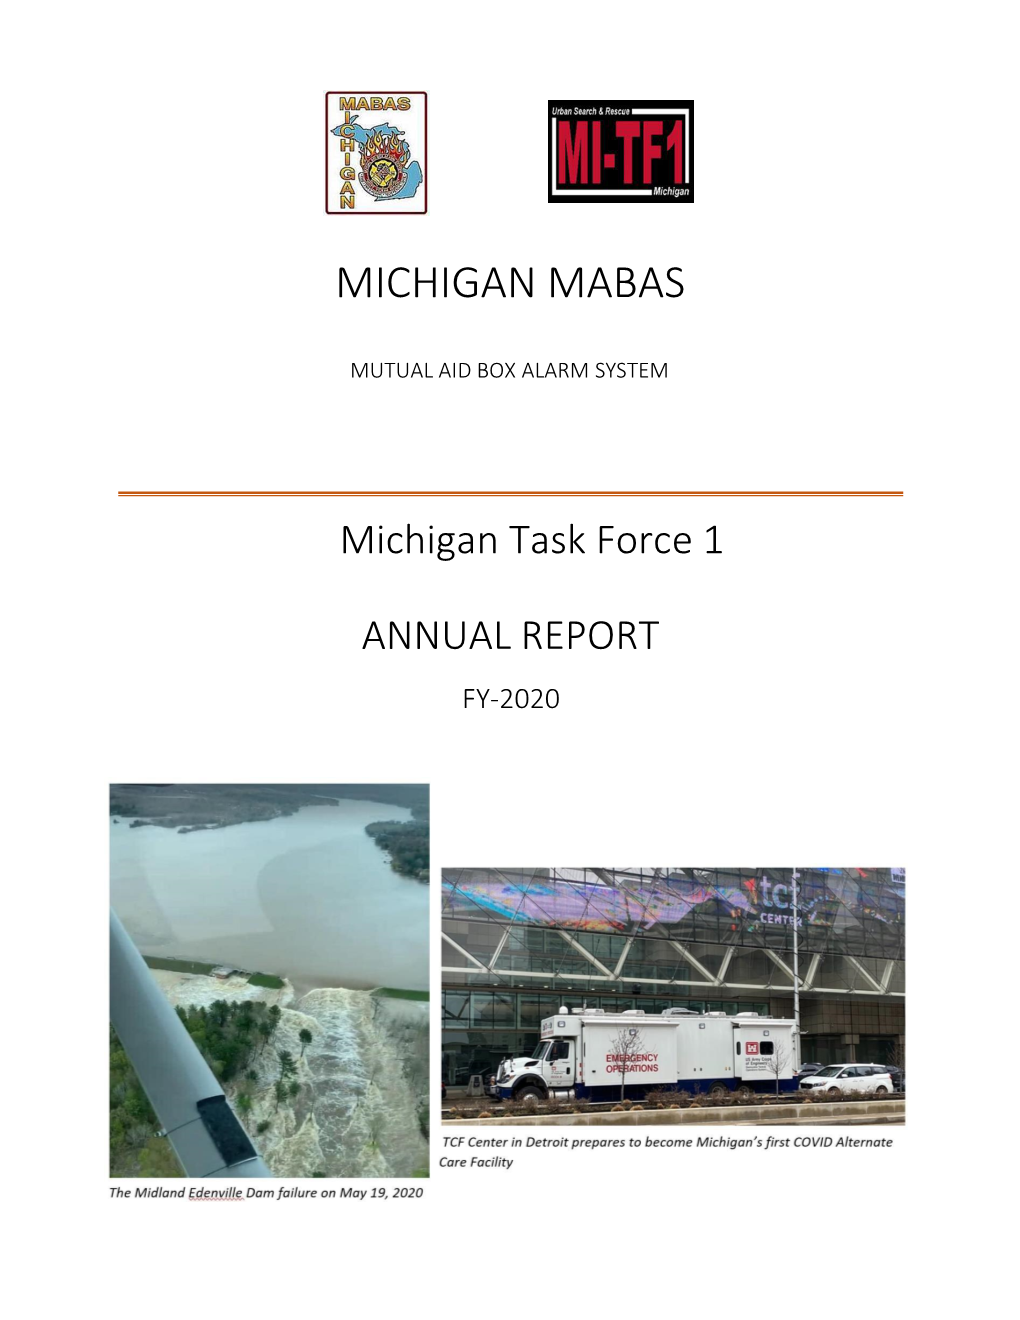 Michigan Task Force 1